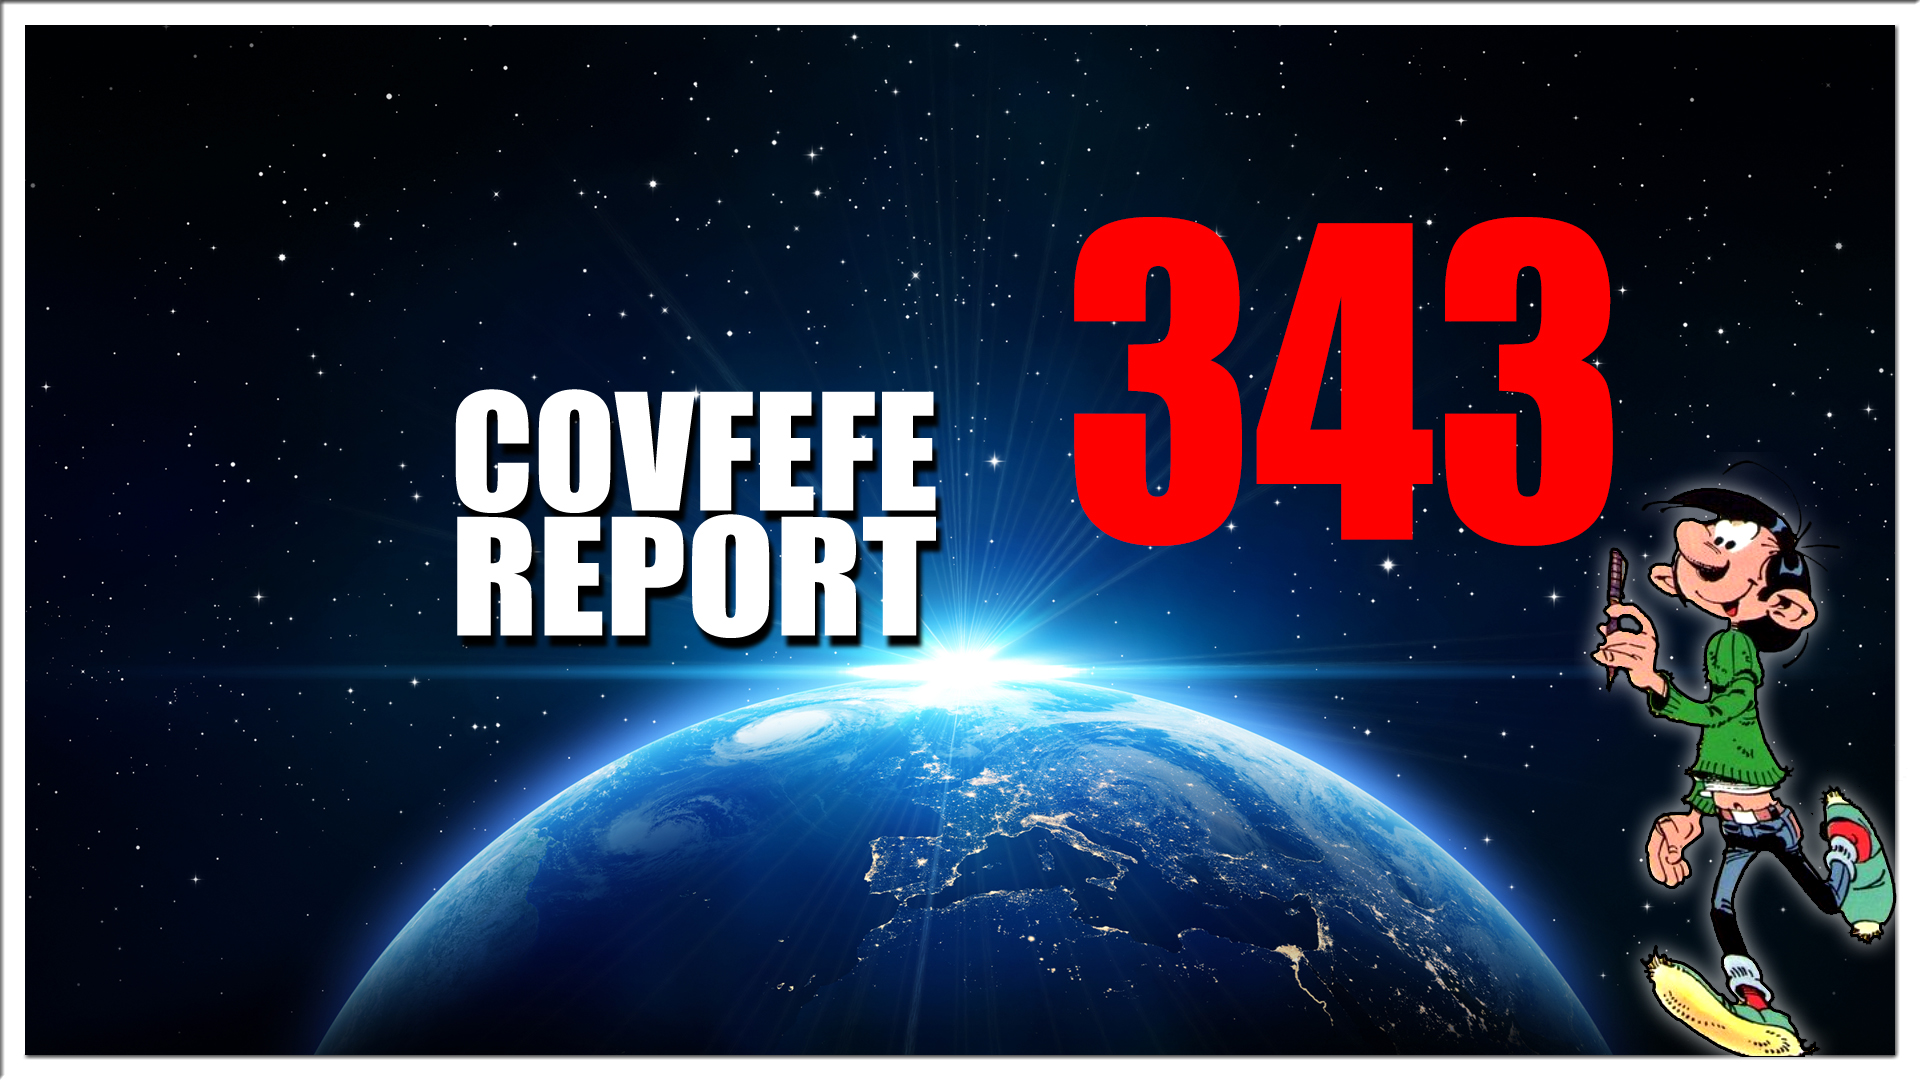 Covfefe Report 343. We're Not Gonna Take It, Mike Flynn,Tc, Margaret Keenan, Gelul in de ruimte